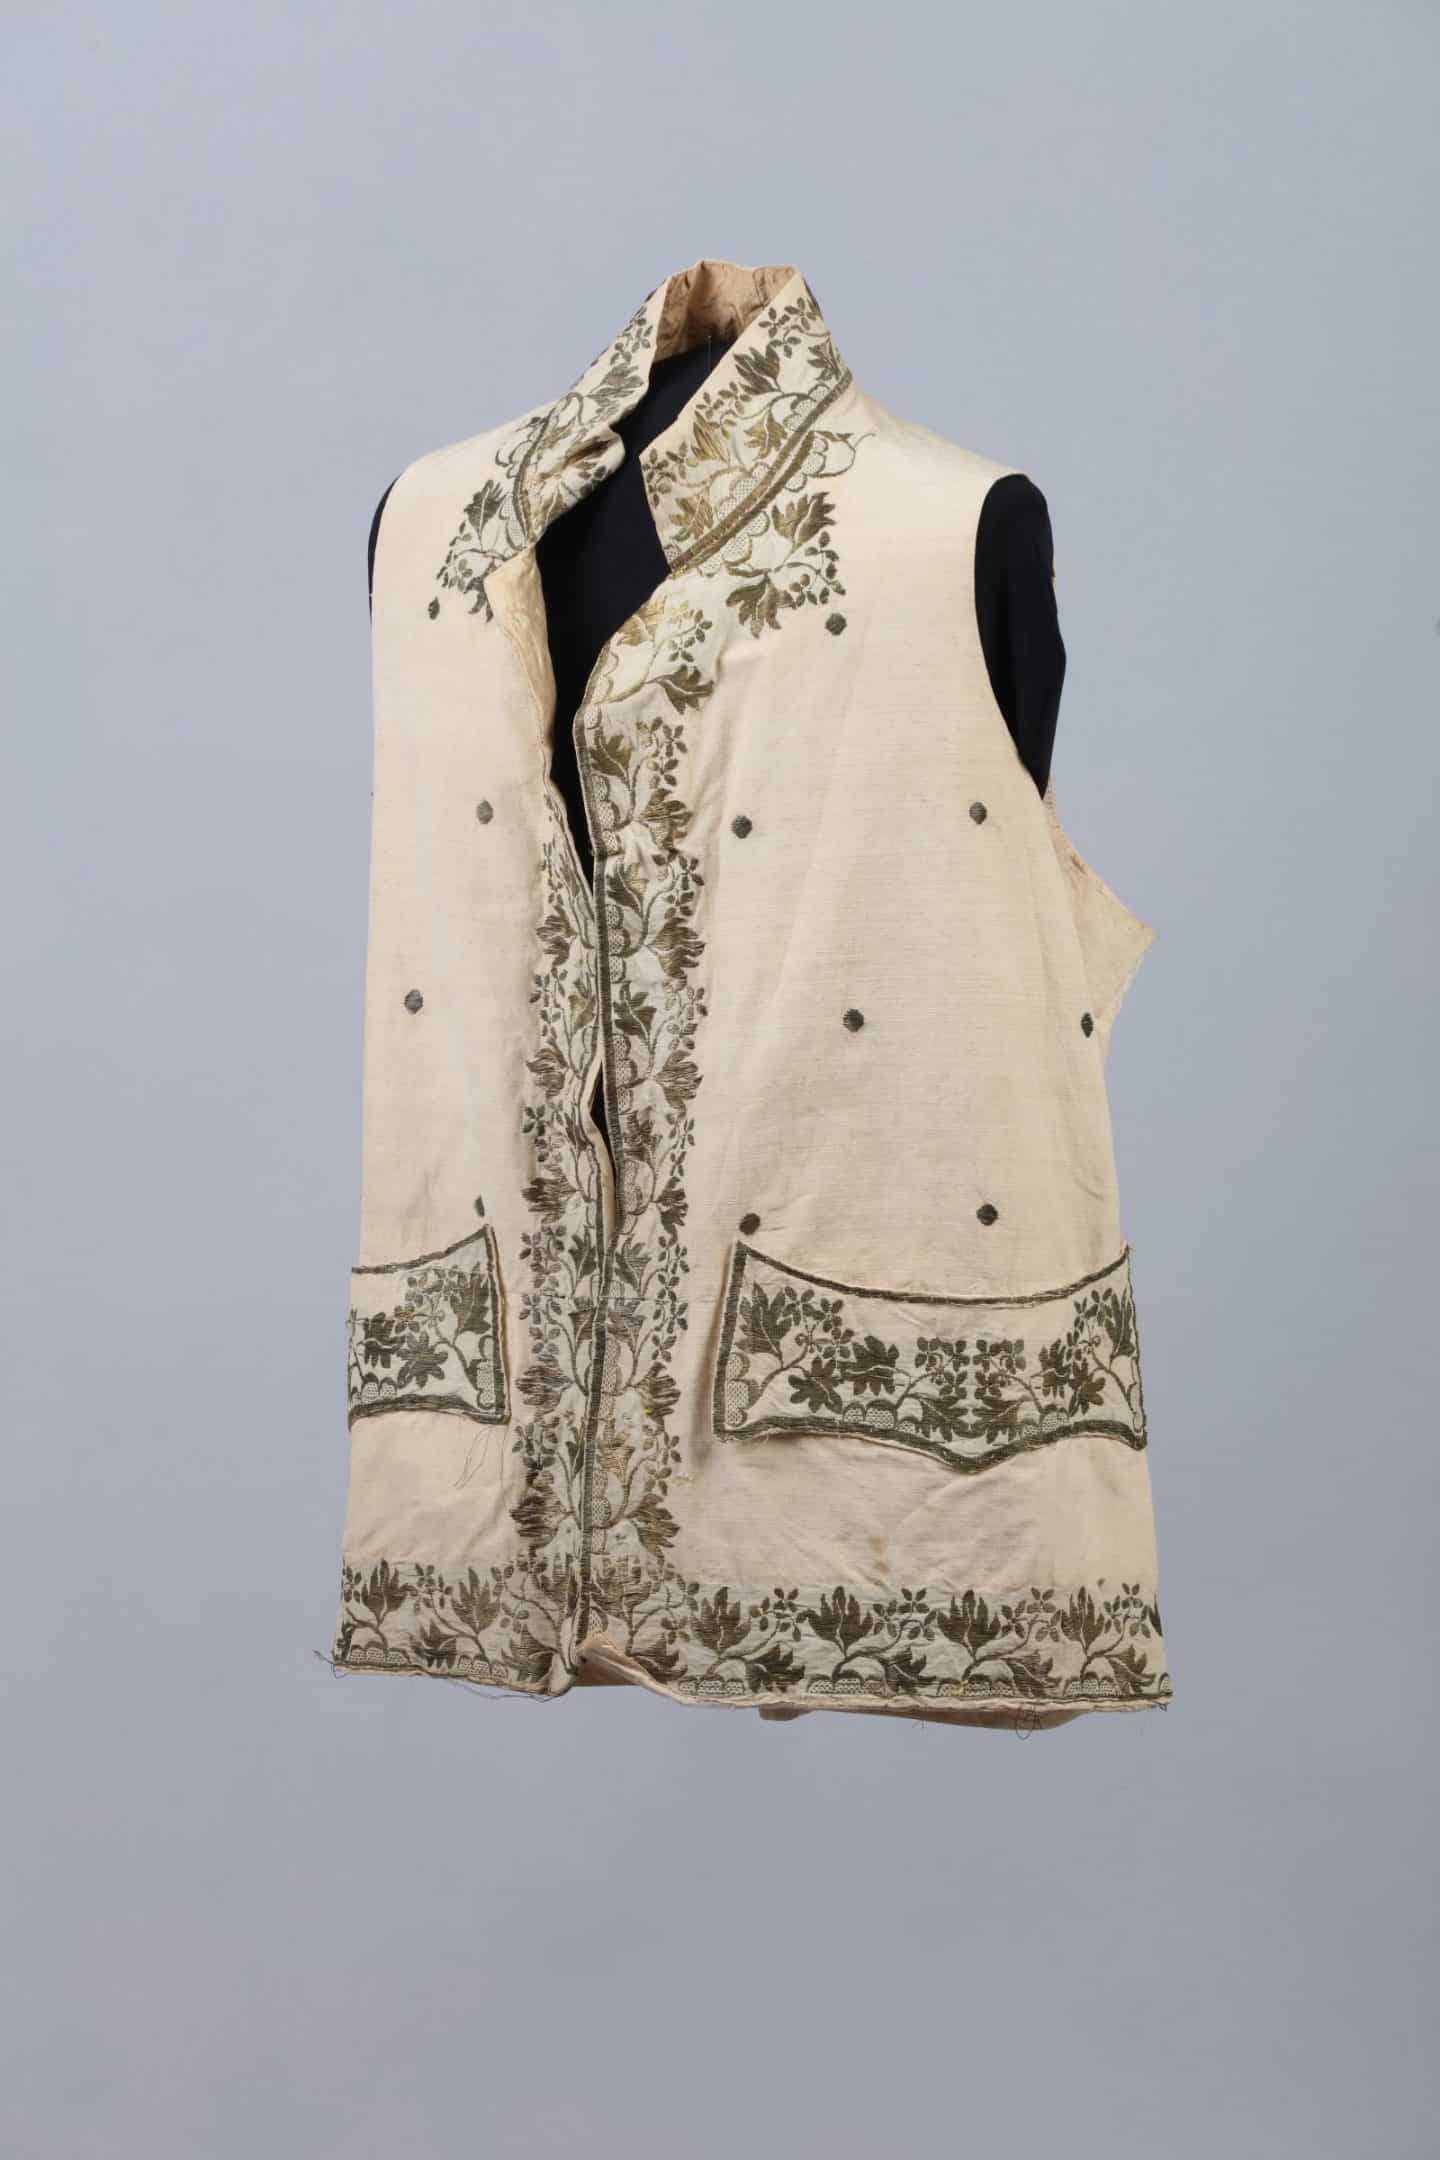 Waistcoat, around 1790–1820, satin, cotton and gold thread. Gift of Margrethe J Birch and Ian H. Birch (Queen’s Science ’37), 1989. Photo: Bernard Clark